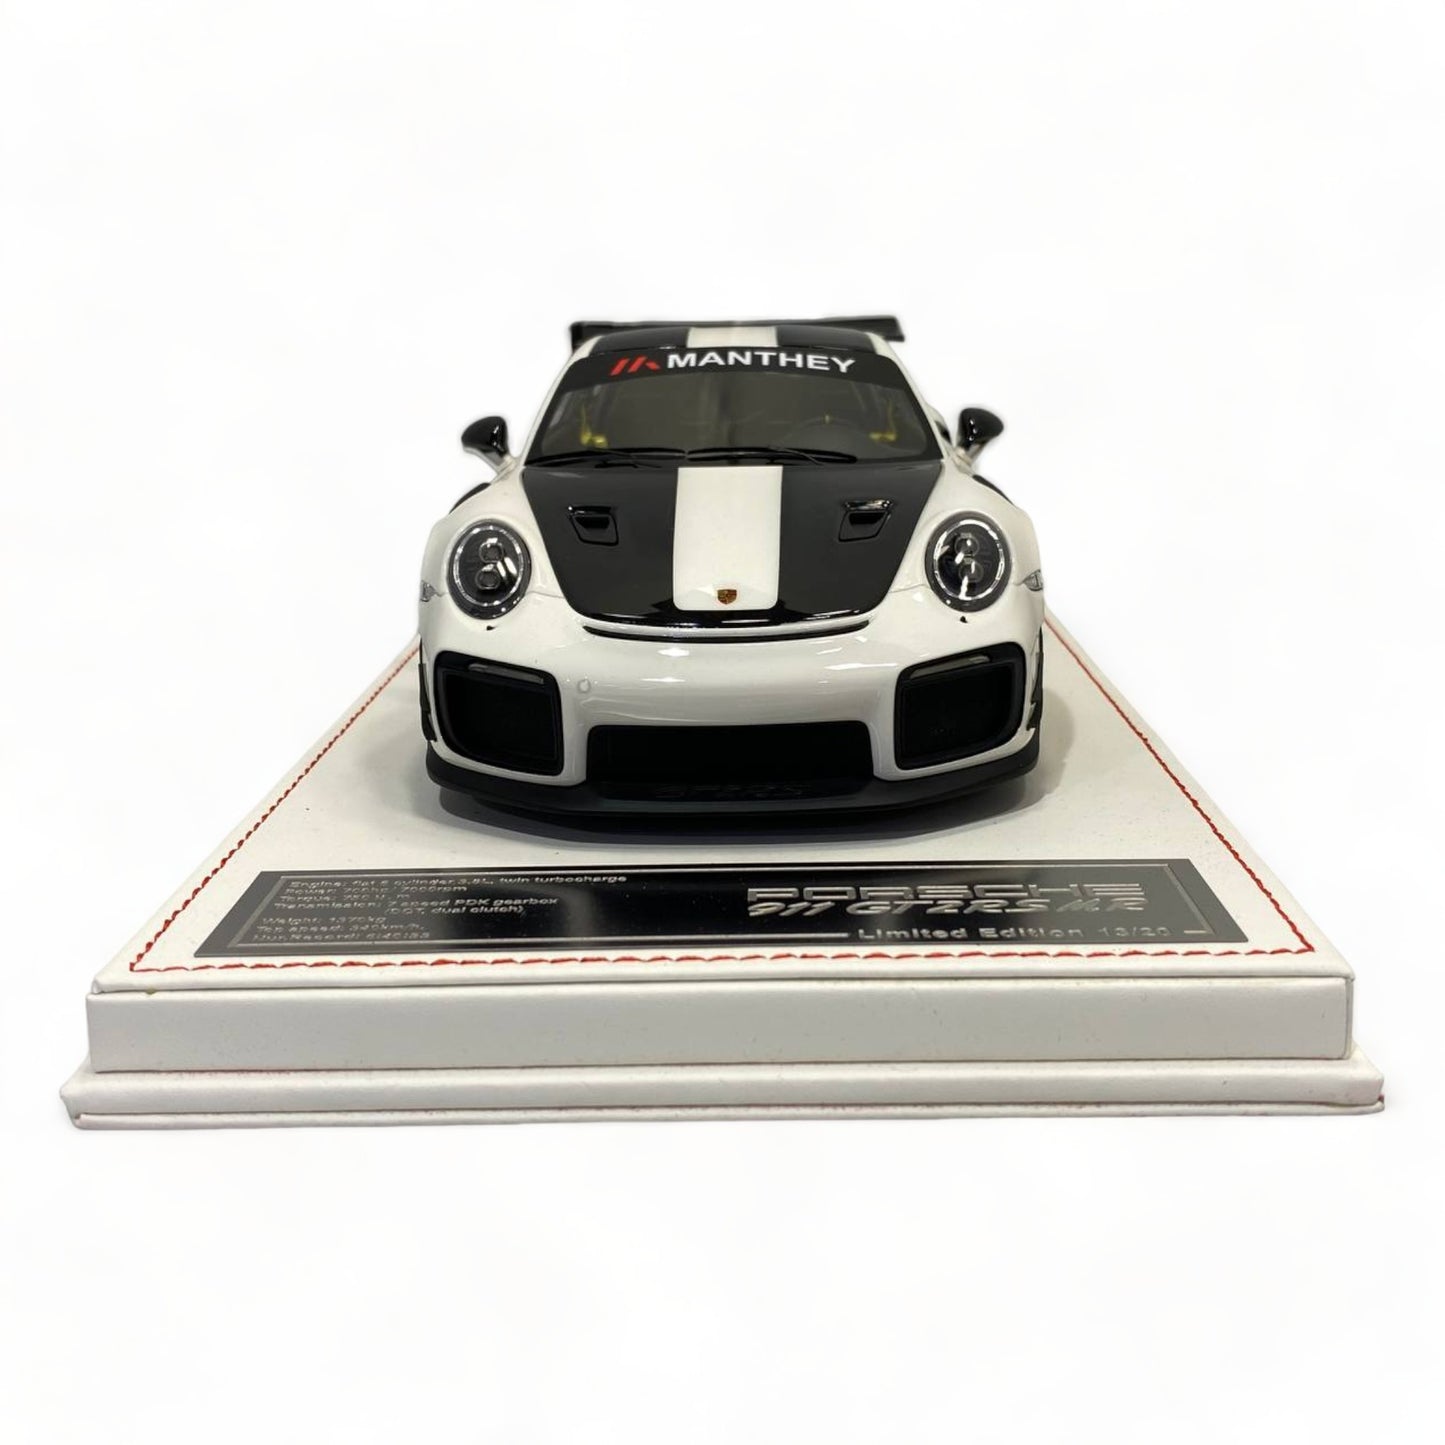 DINO Porsche 911 GT2 RS MR Limited Edition